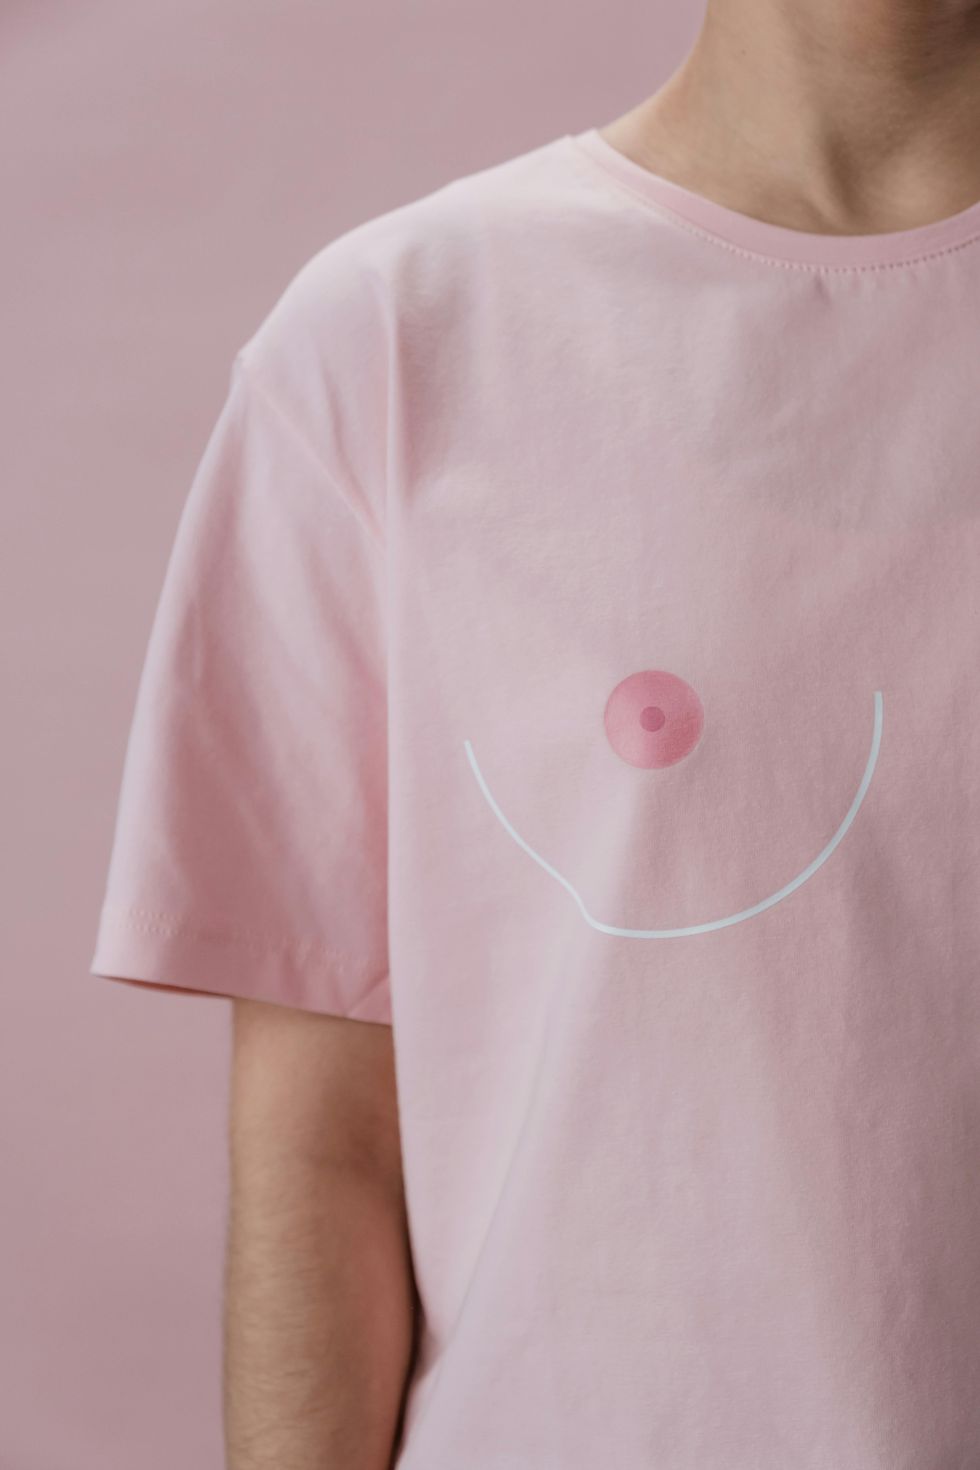 woman wearing pink t-shirt